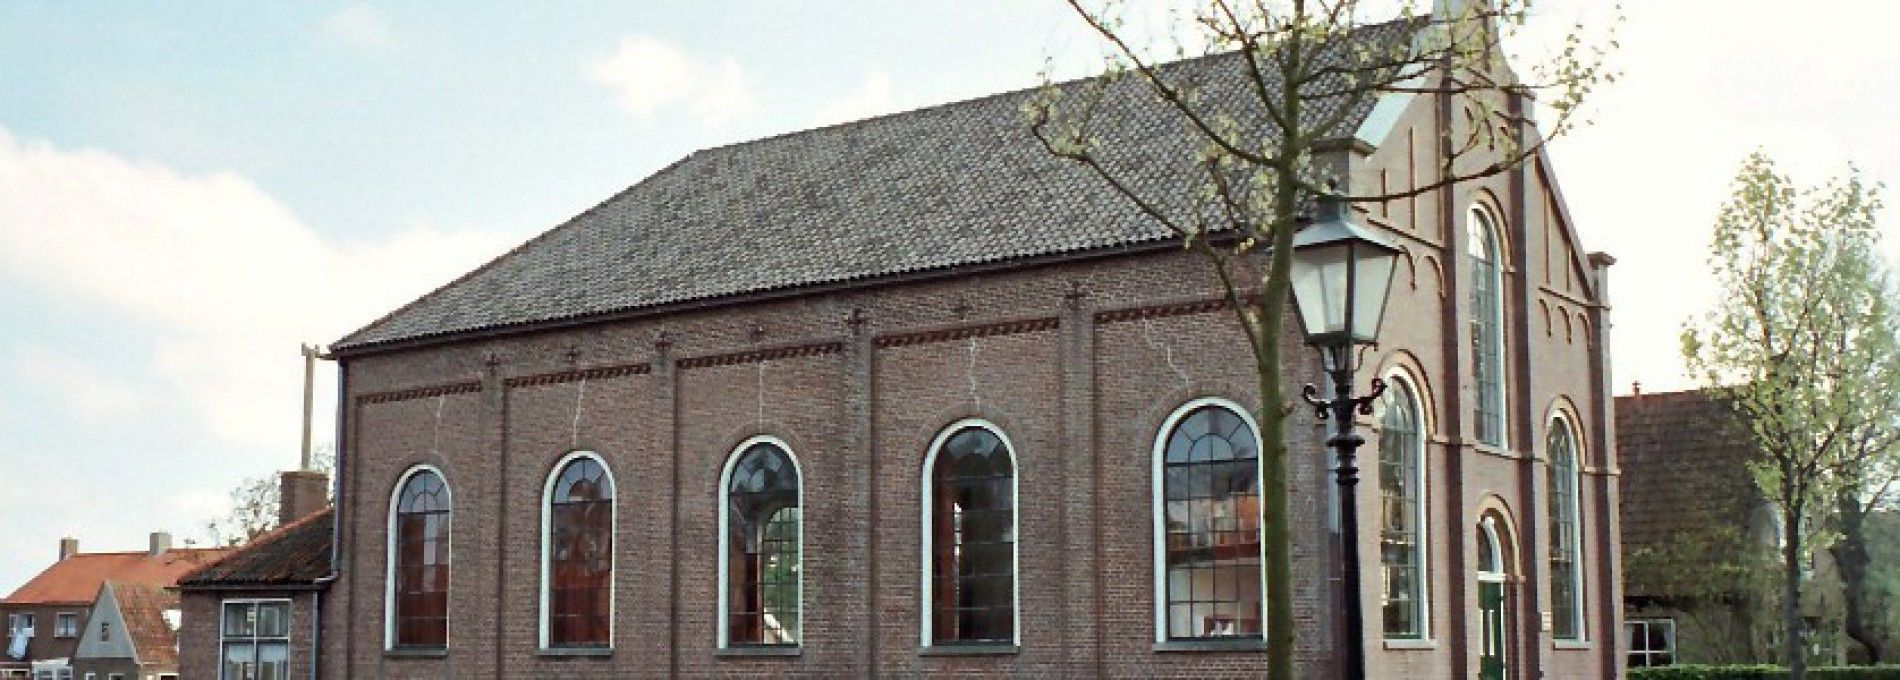 Taufgesinnt-reformierte Federation, Kirche Hollum